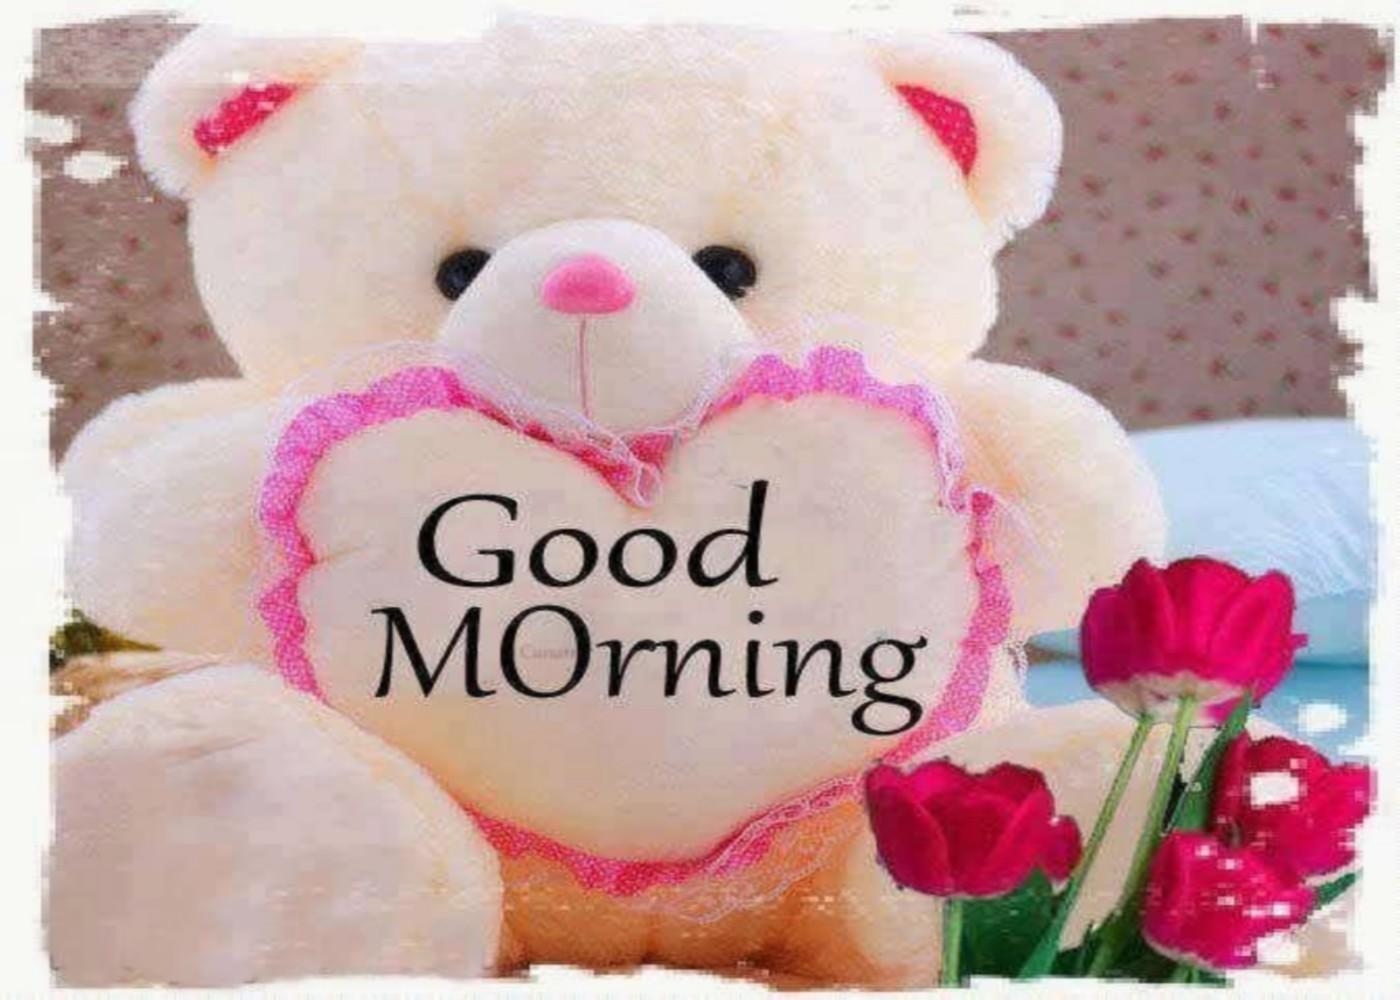 Really good morning. Good morning. Good morning цветы. Good morning вацап. Открытка доброе утро принцесса.